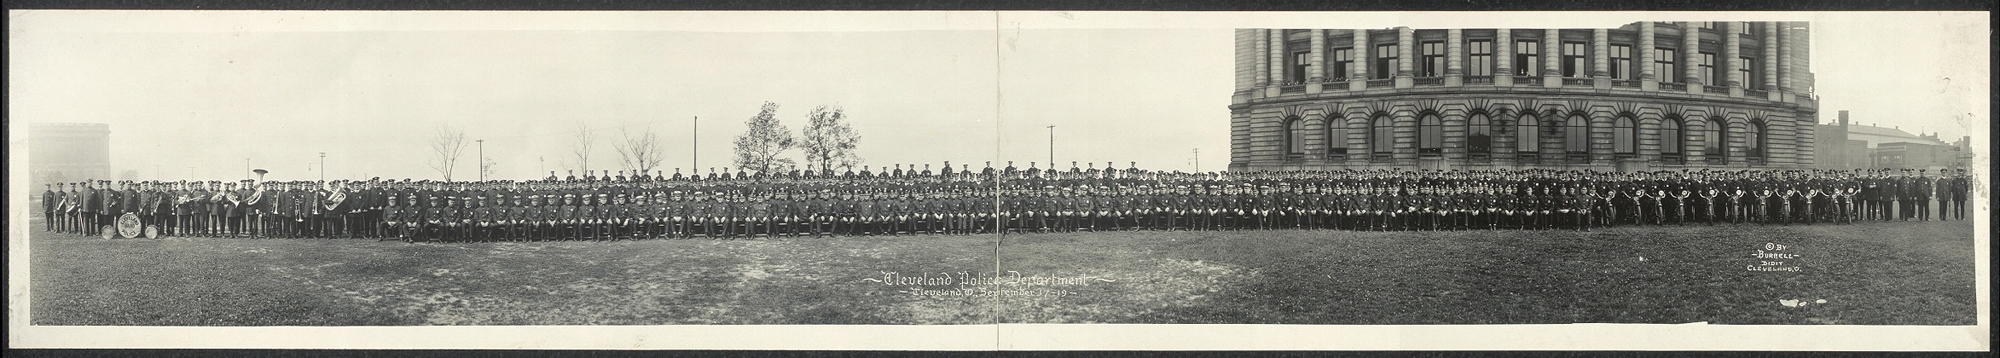 Cleveland Police Department, um 1918